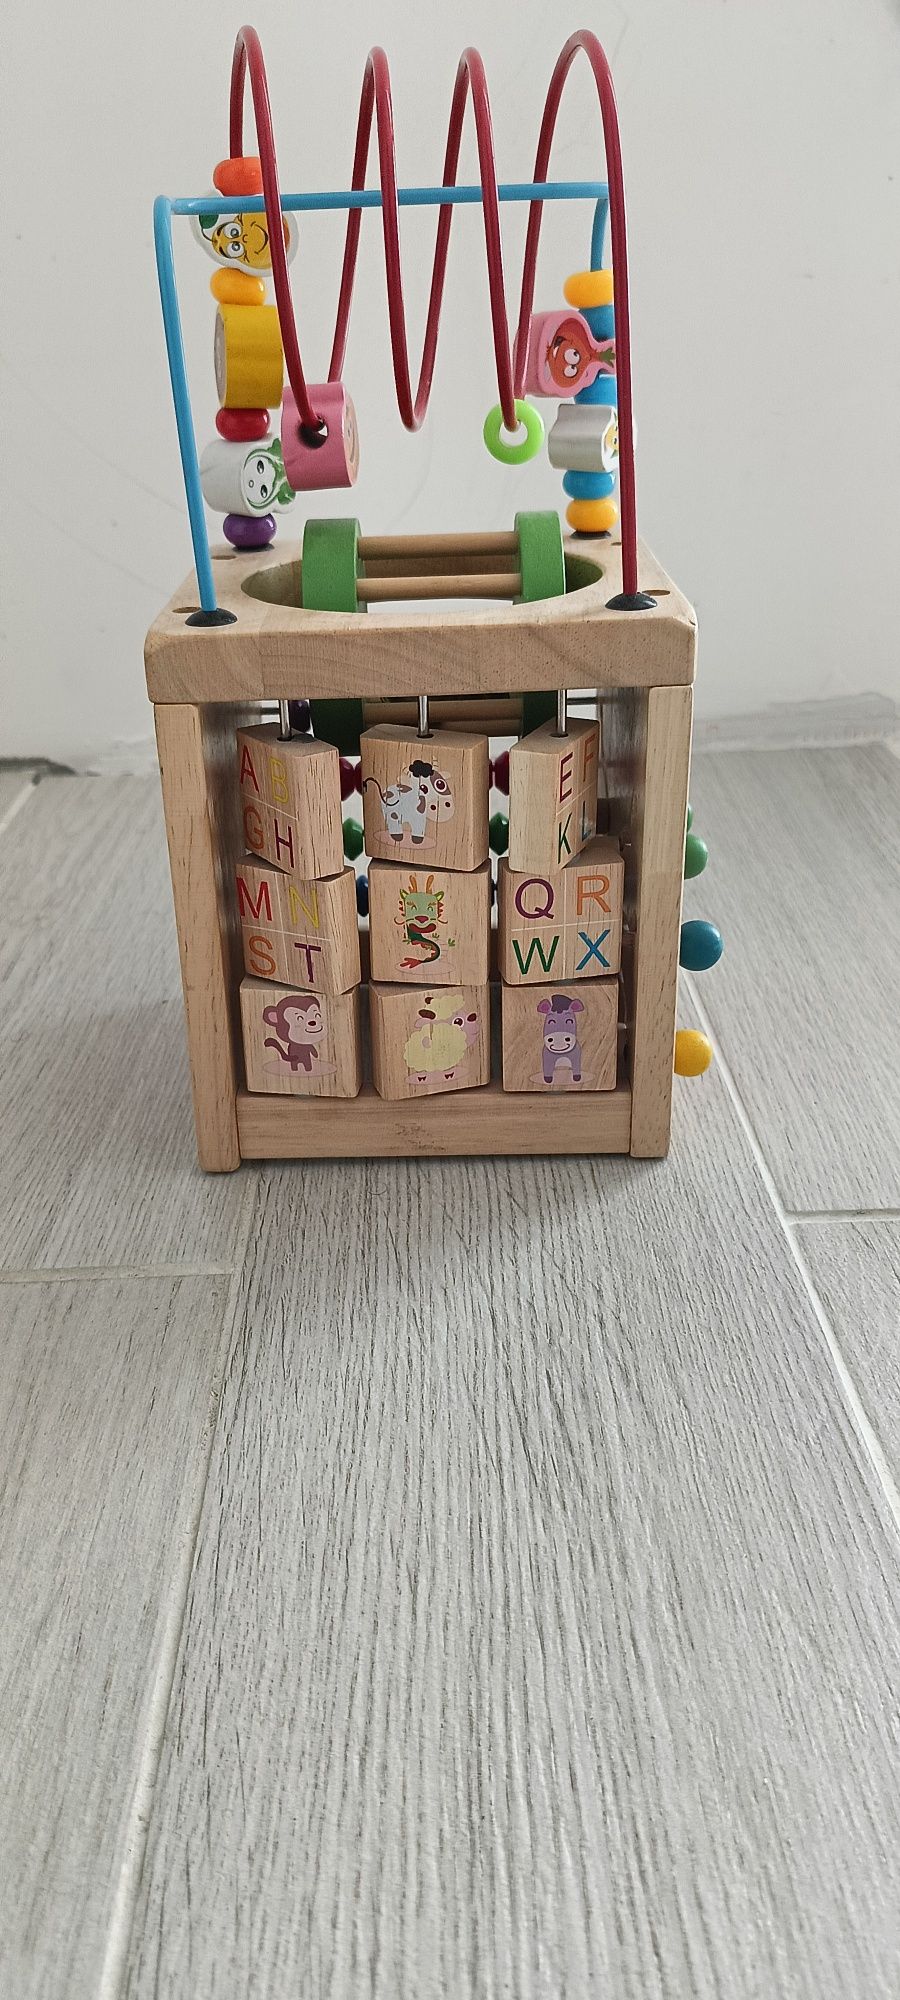 Cub educativ din lemn, 7 in 1, Montessori